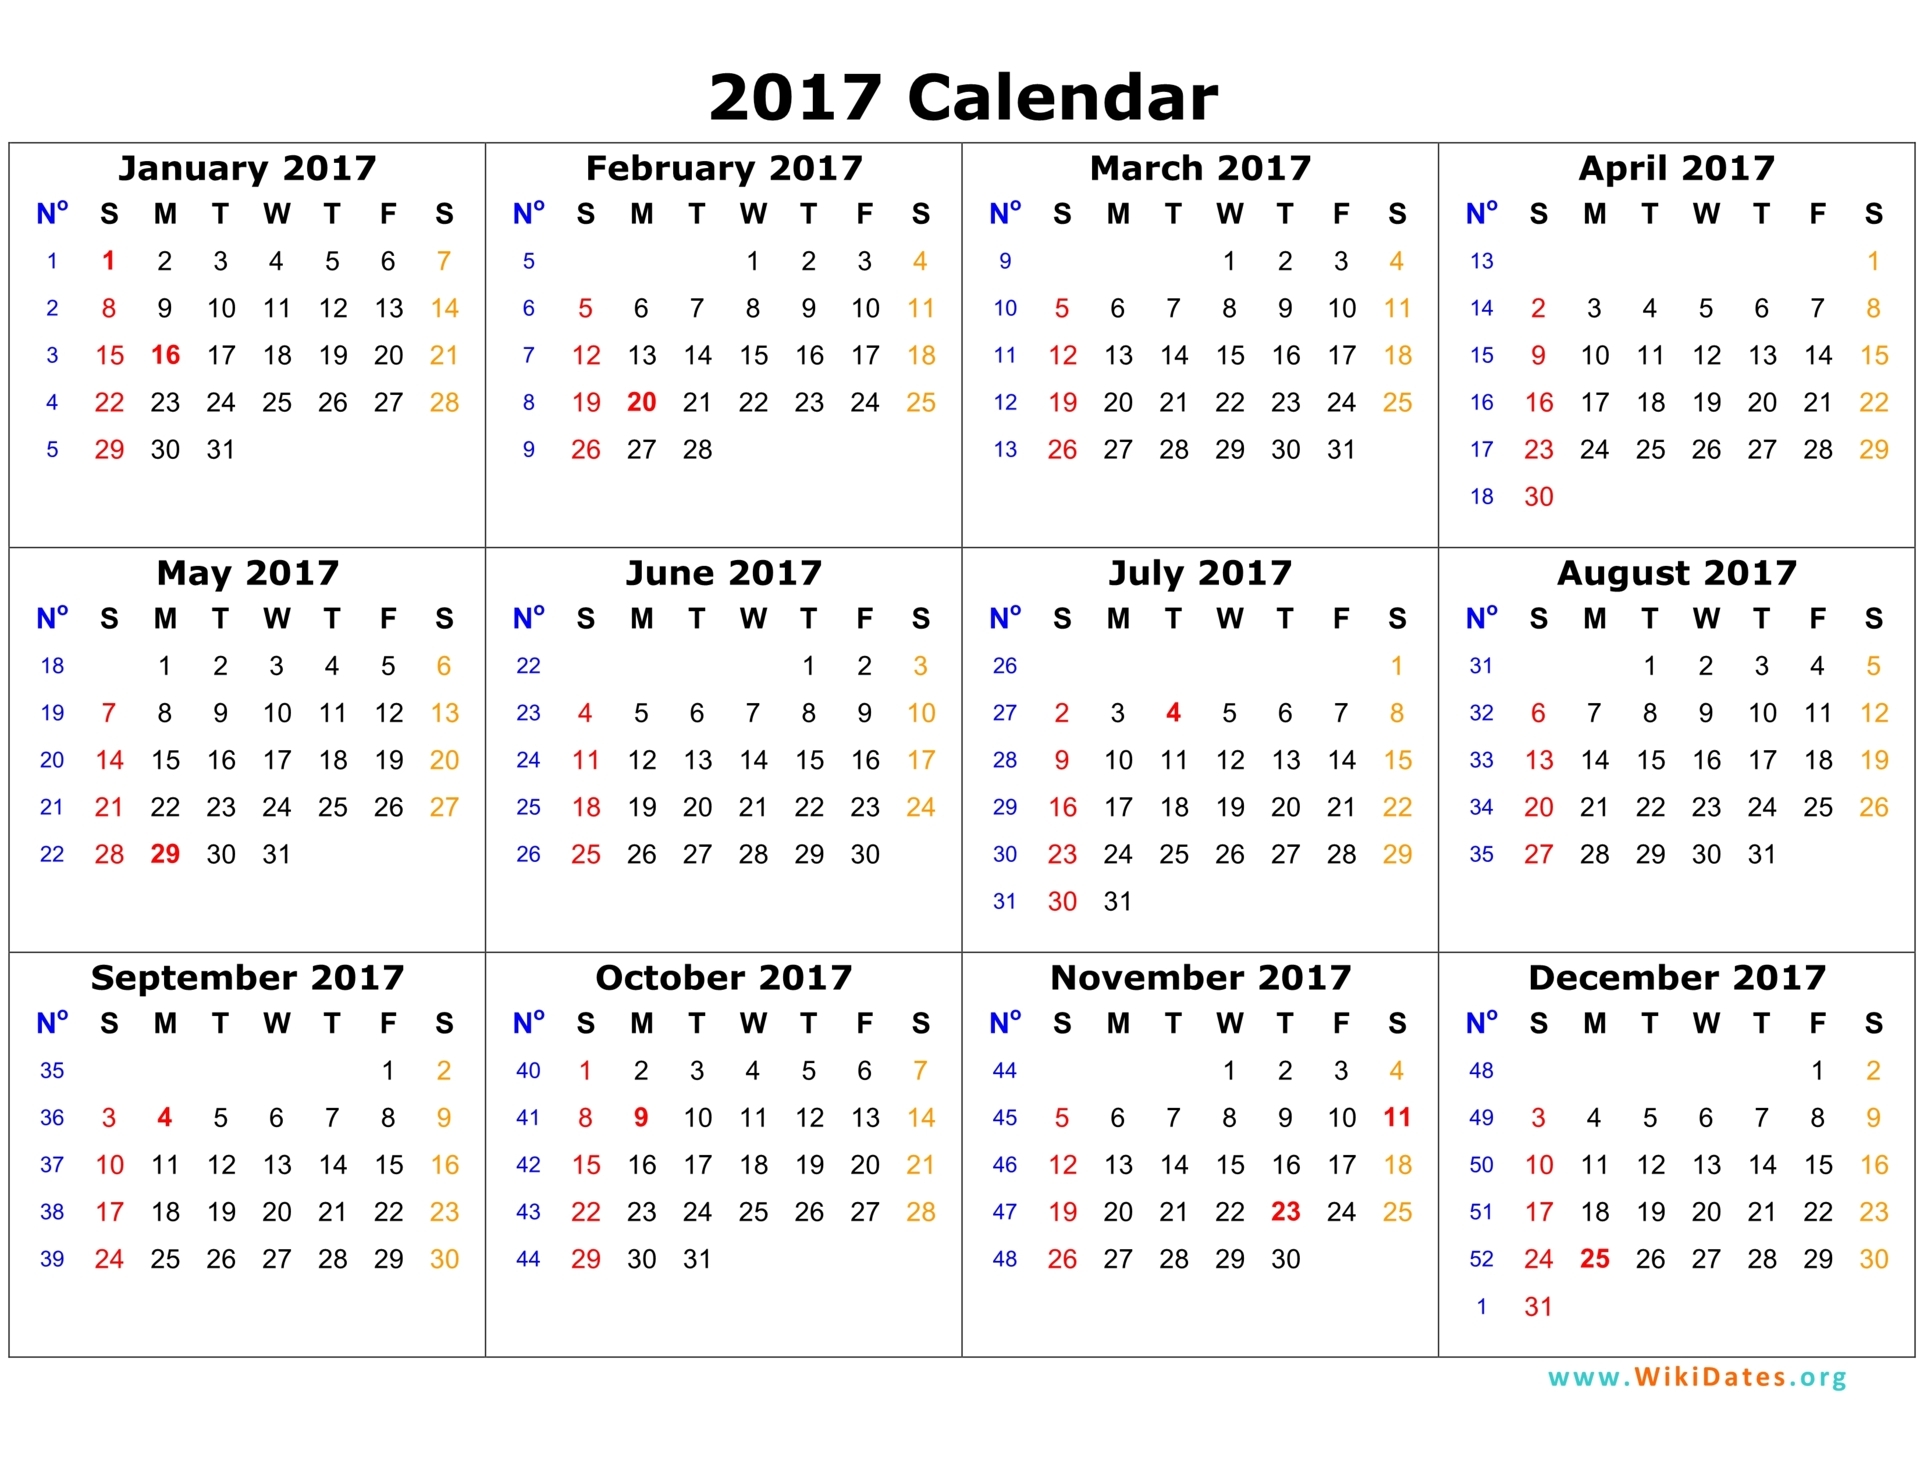 2017 Calendar WikiDates